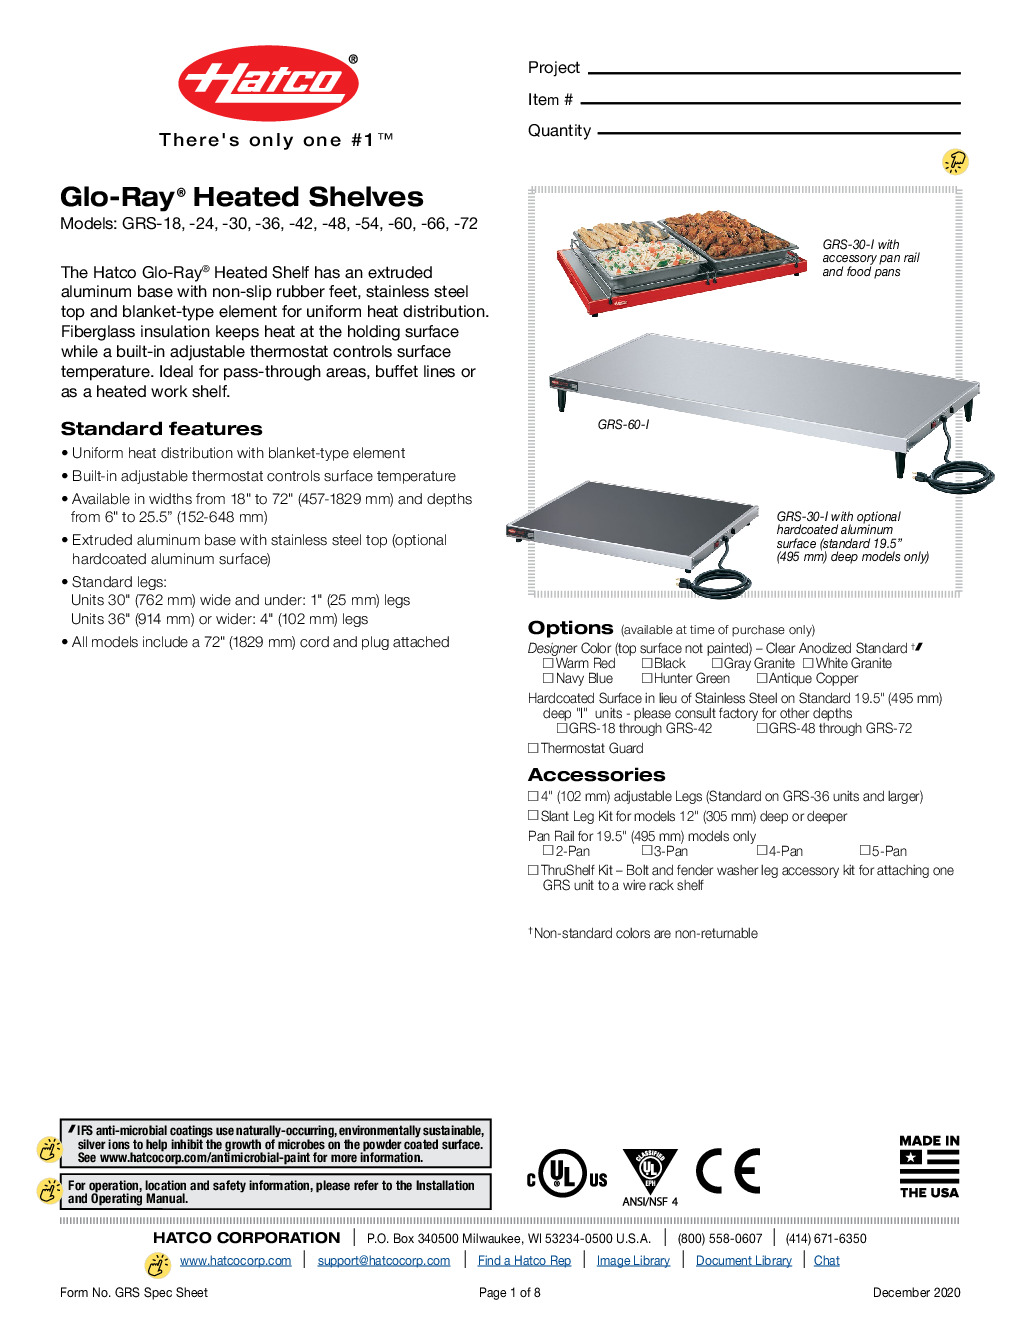 Hatco GRS-48 Glo-Ray Heated Shelves